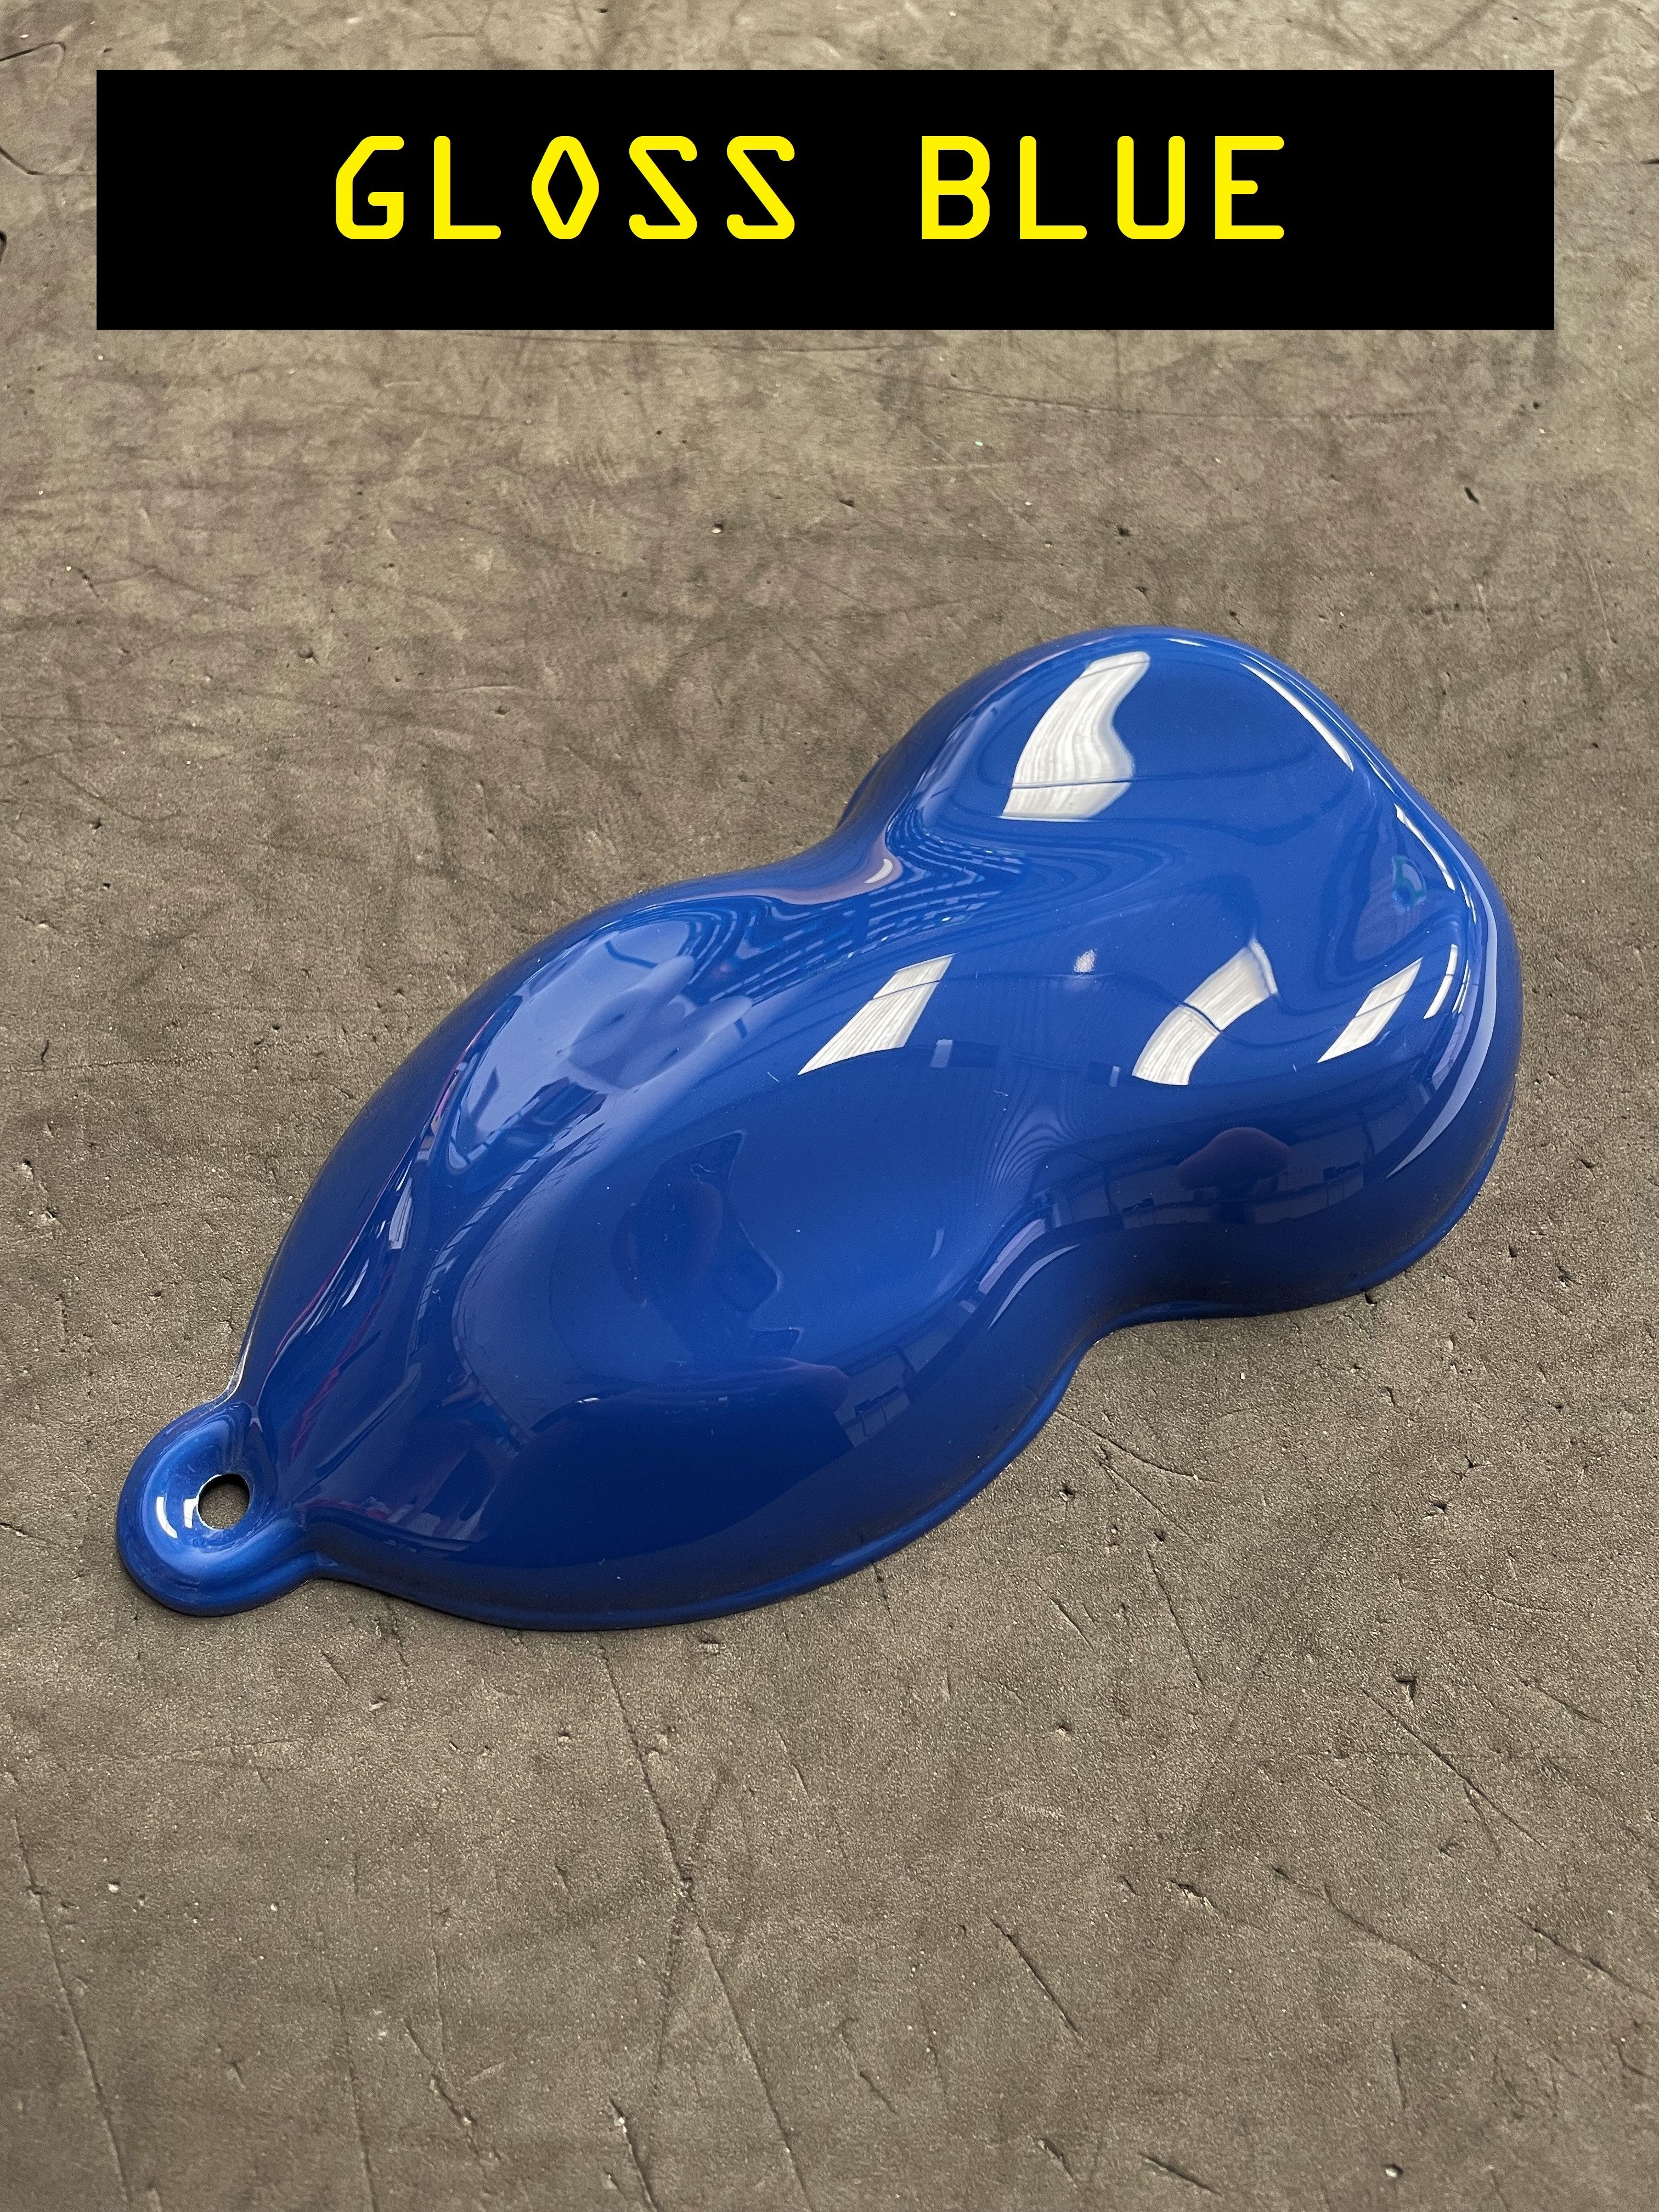 Proform Brake Fluid Reservoir Cap Cover - Mk6 Fiesta (Plastic Finishes)